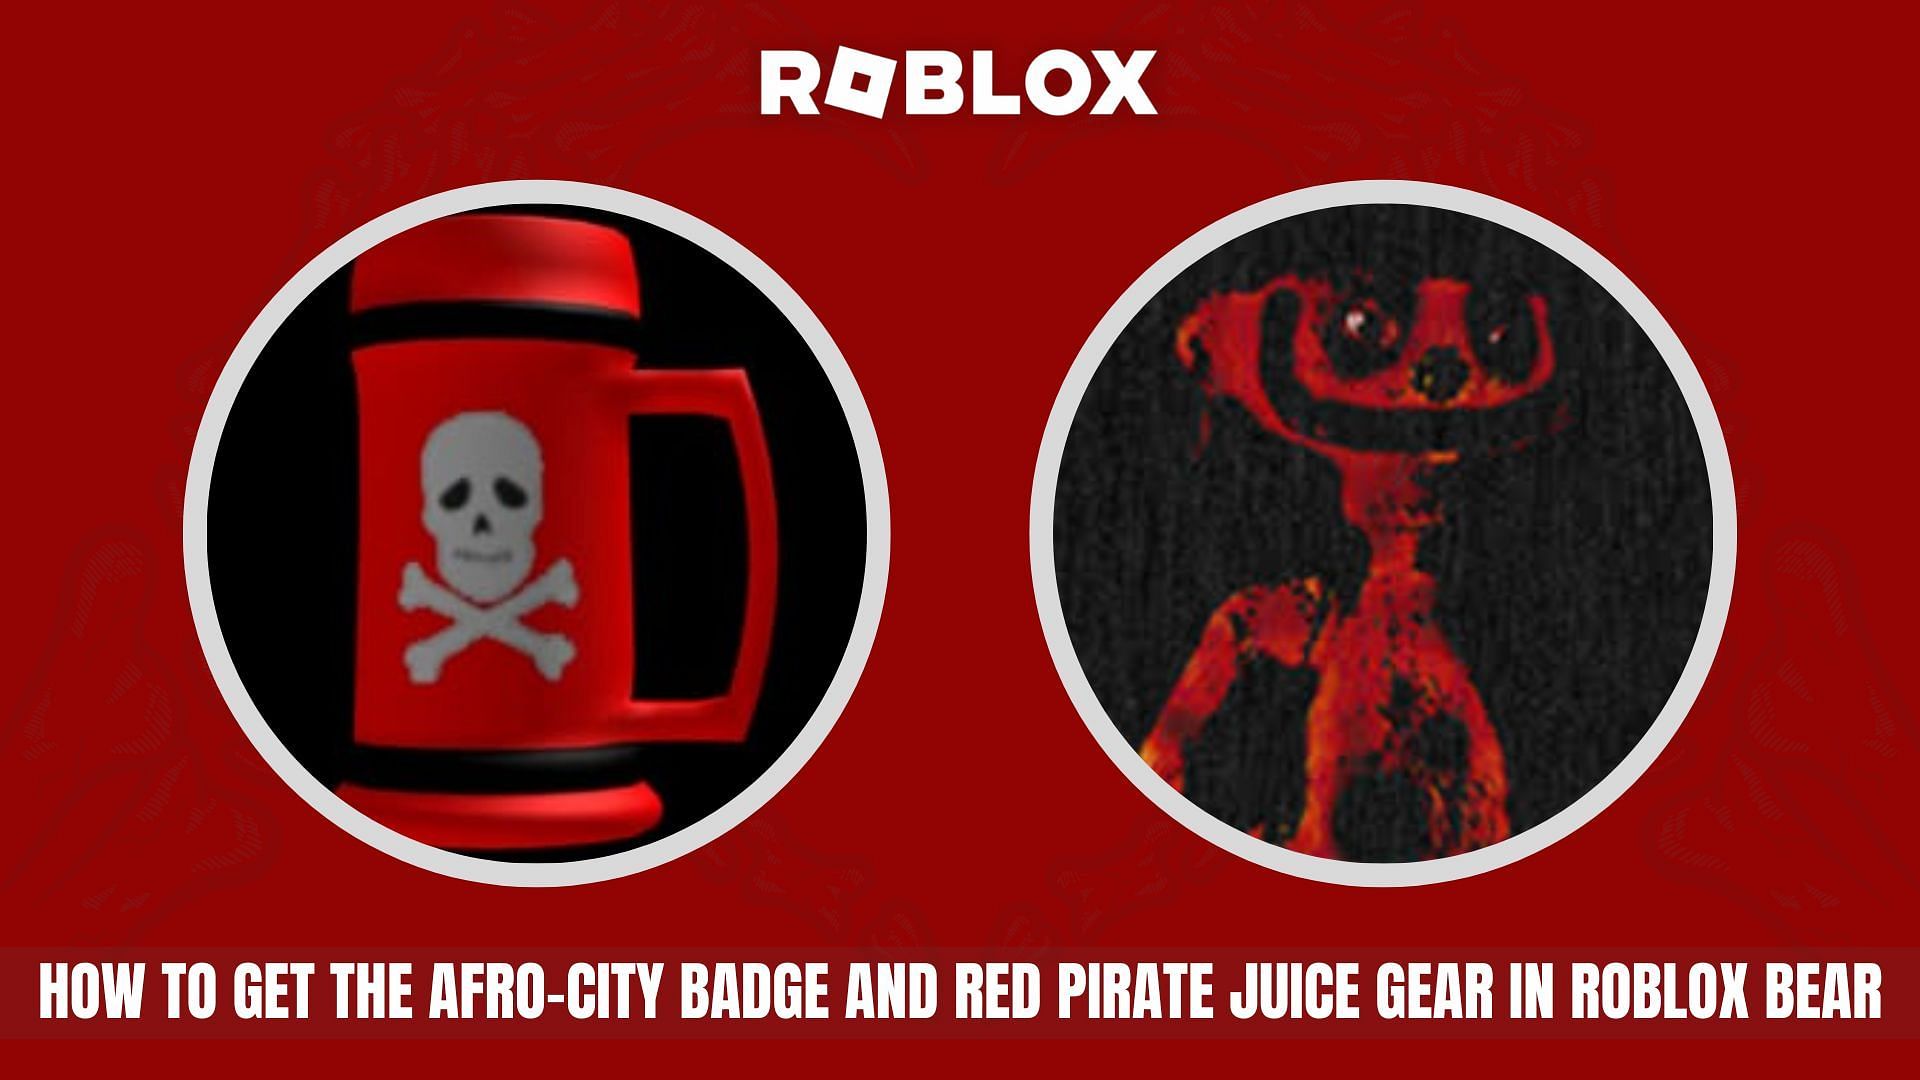 Featured image of the badge and red mug (Image via Sportskeeda)